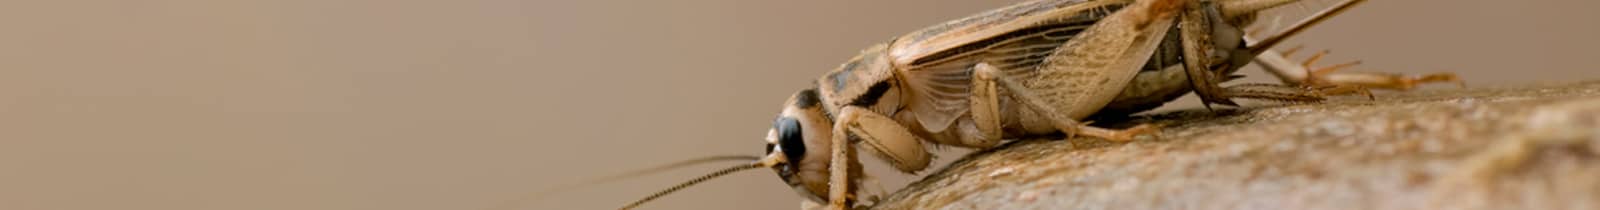 cricket-control-exterminator Boise, Idaho